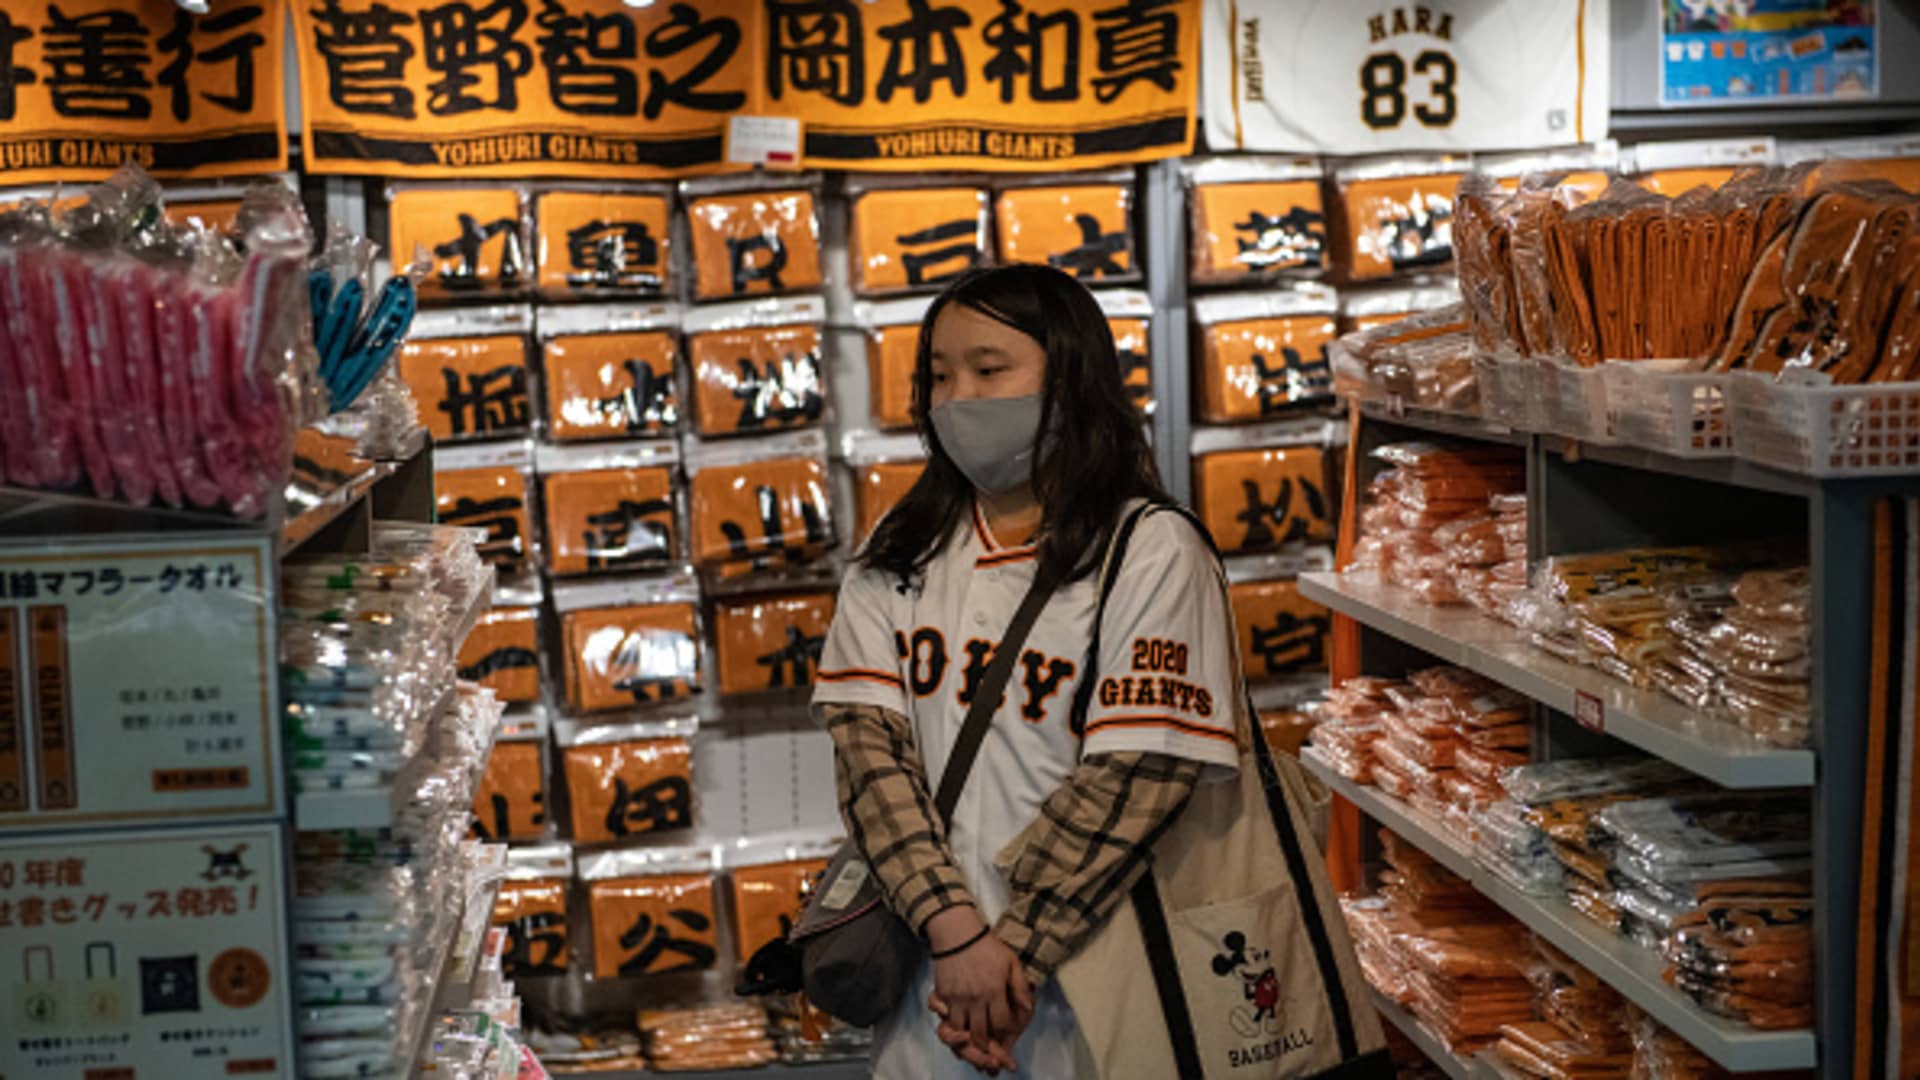 Fanatics, Nike take sports merchandise model global in deal with Yomiuri Giants, Japan's most popular baseball team